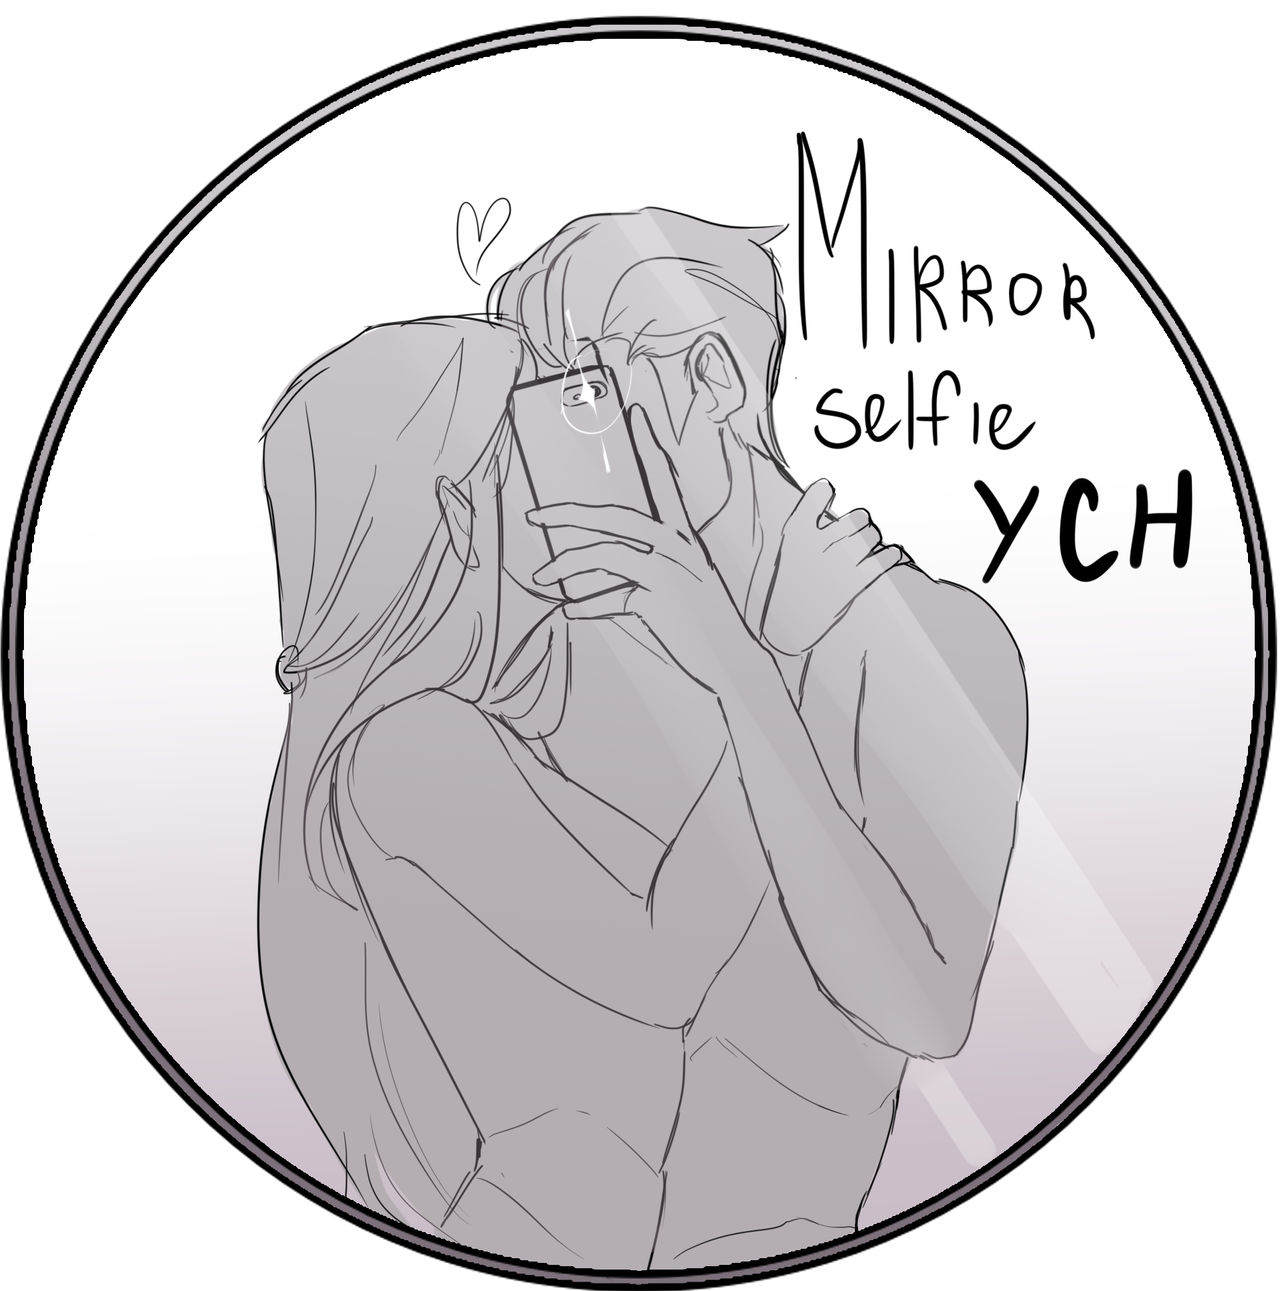 Mirror selfie YCH [CLOSED] by NautilusOO on DeviantArt